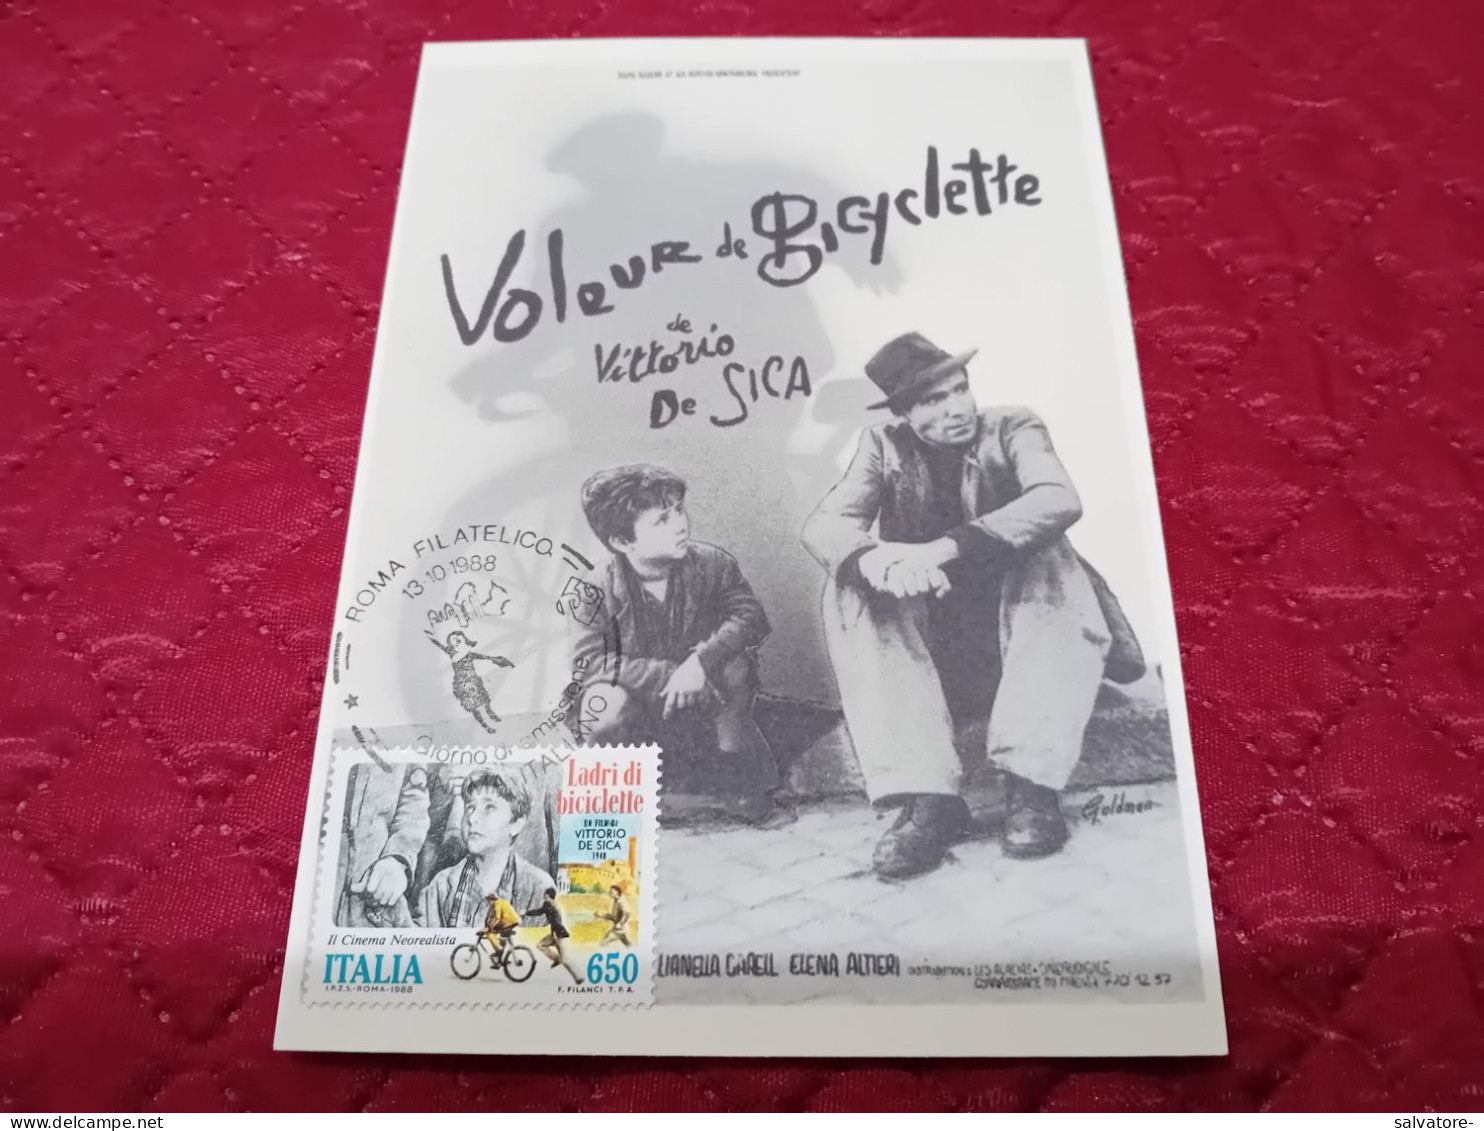 CARTOLINA VOLEUR DE BICICLETTE 1988 - Publicidad